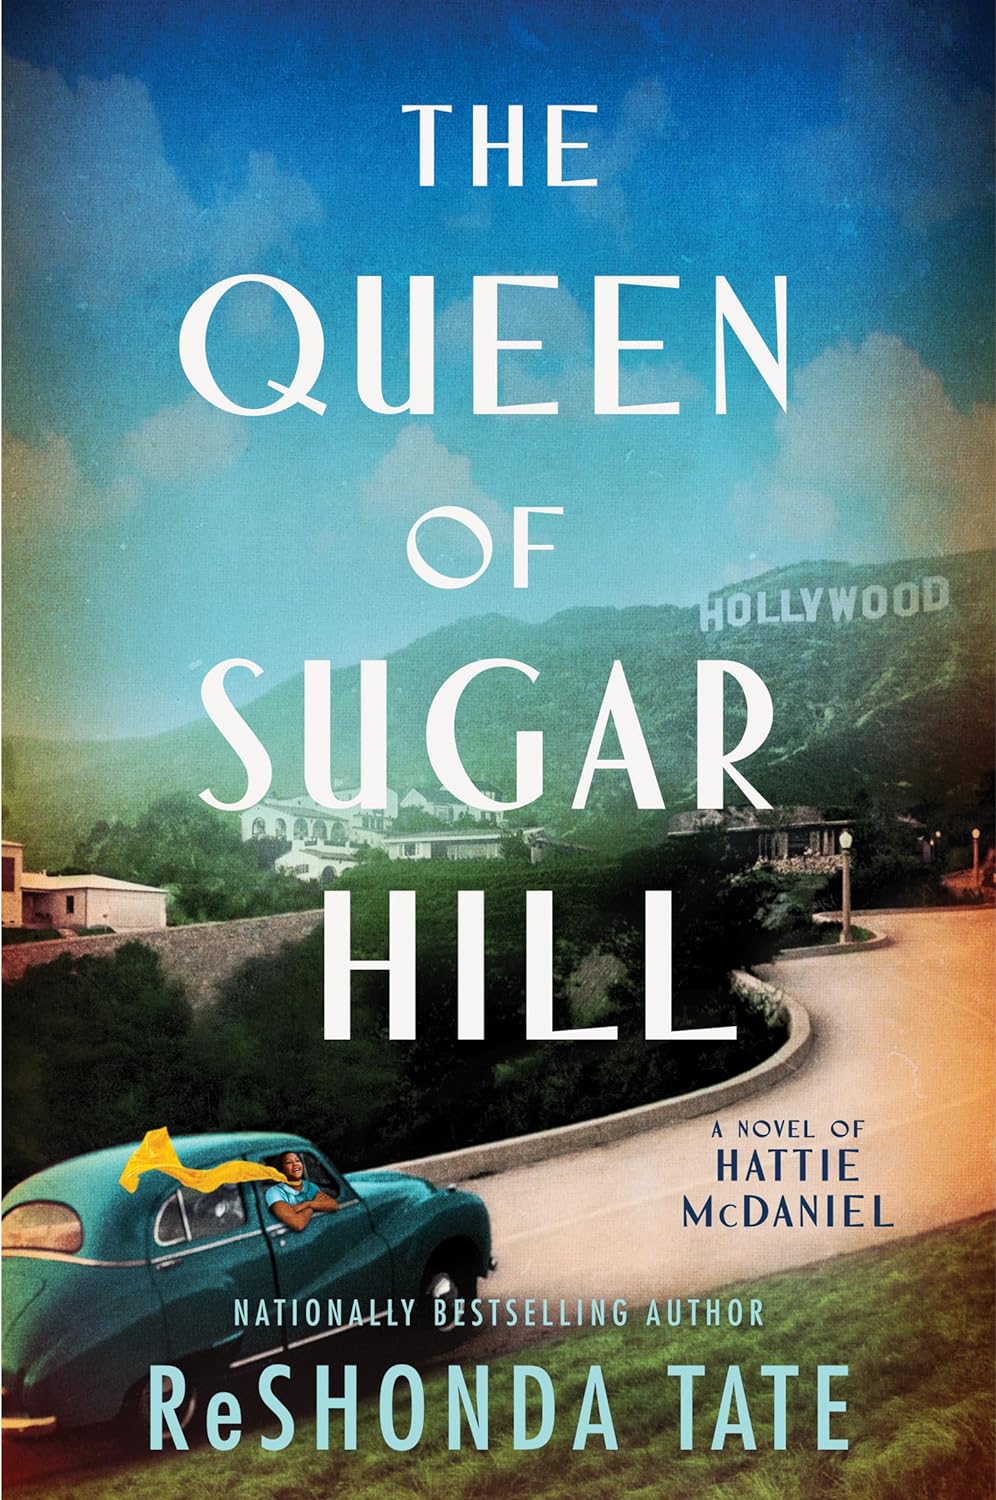 The Queen of Sugar Hill // A Novel of Hattie McDaniel